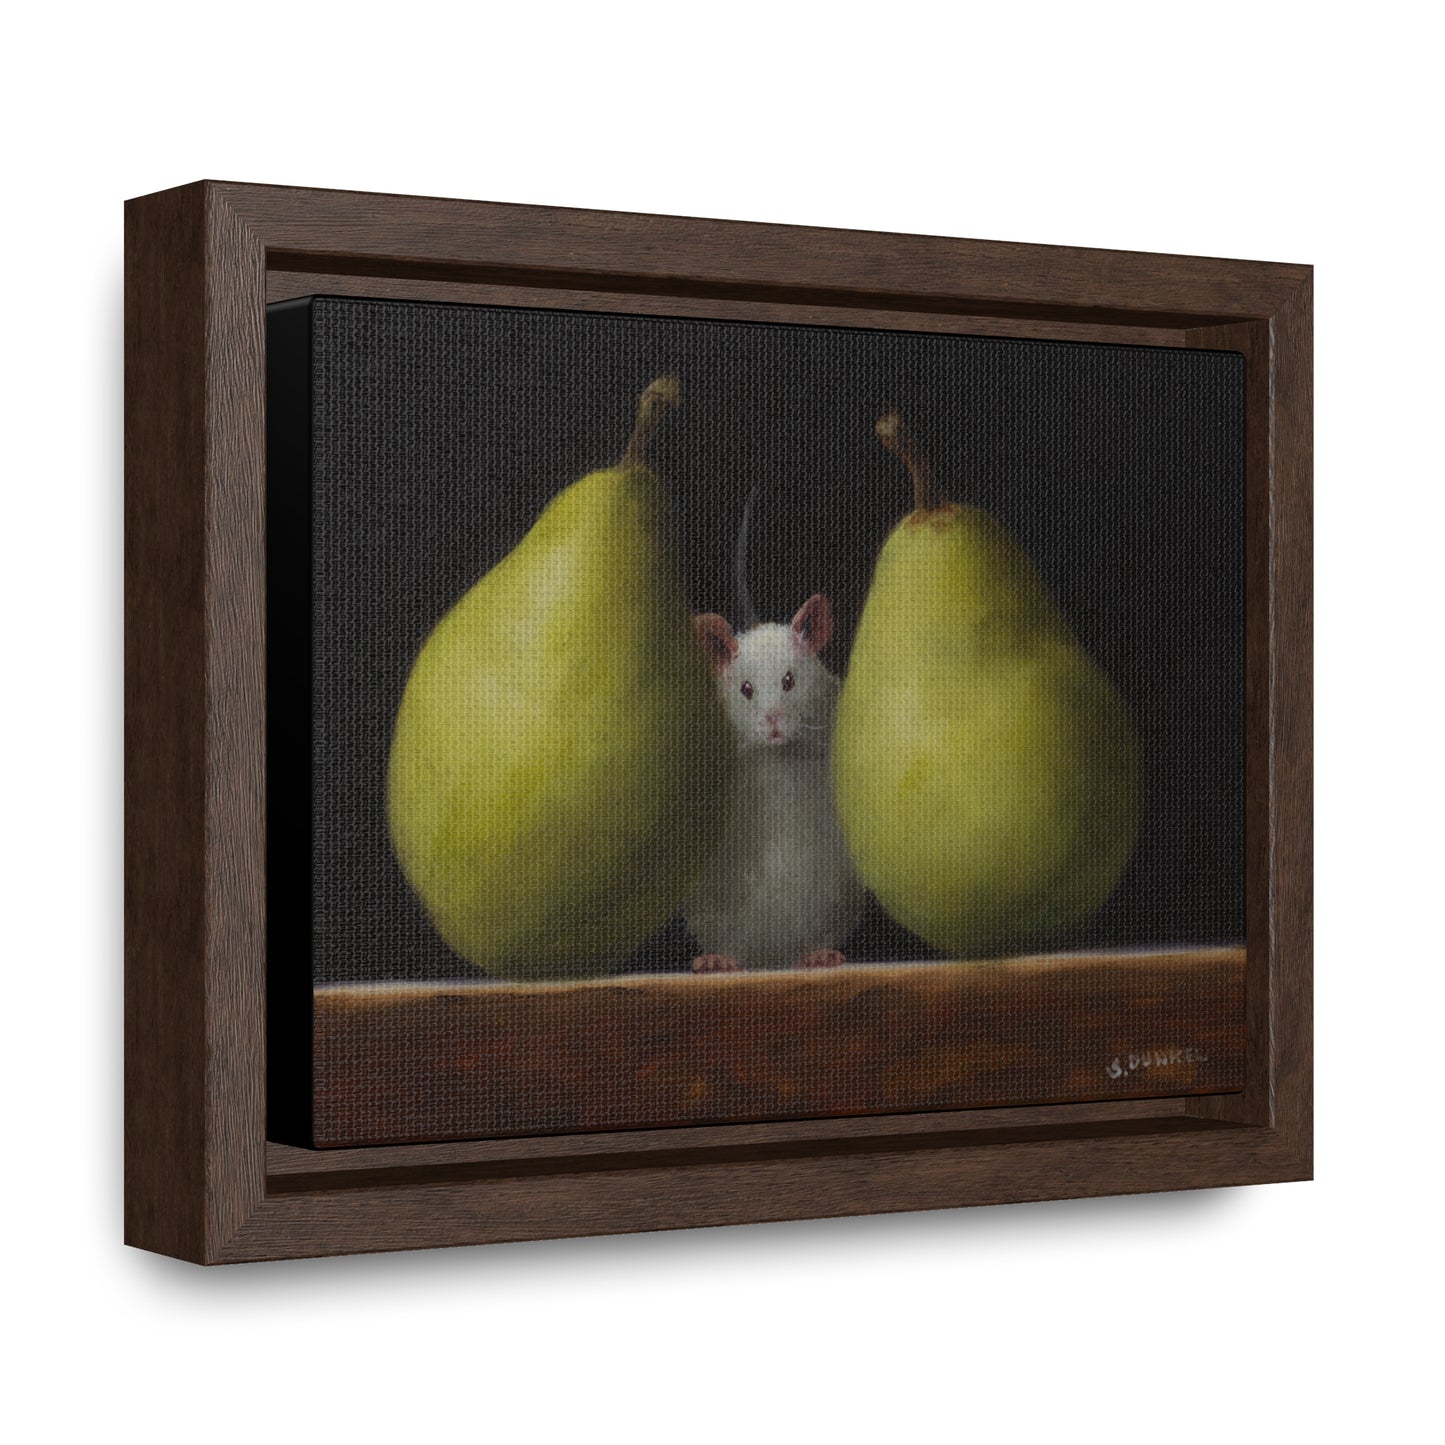 Stuart Dunkel: "Buddies" - Framed Canvas Reproduction